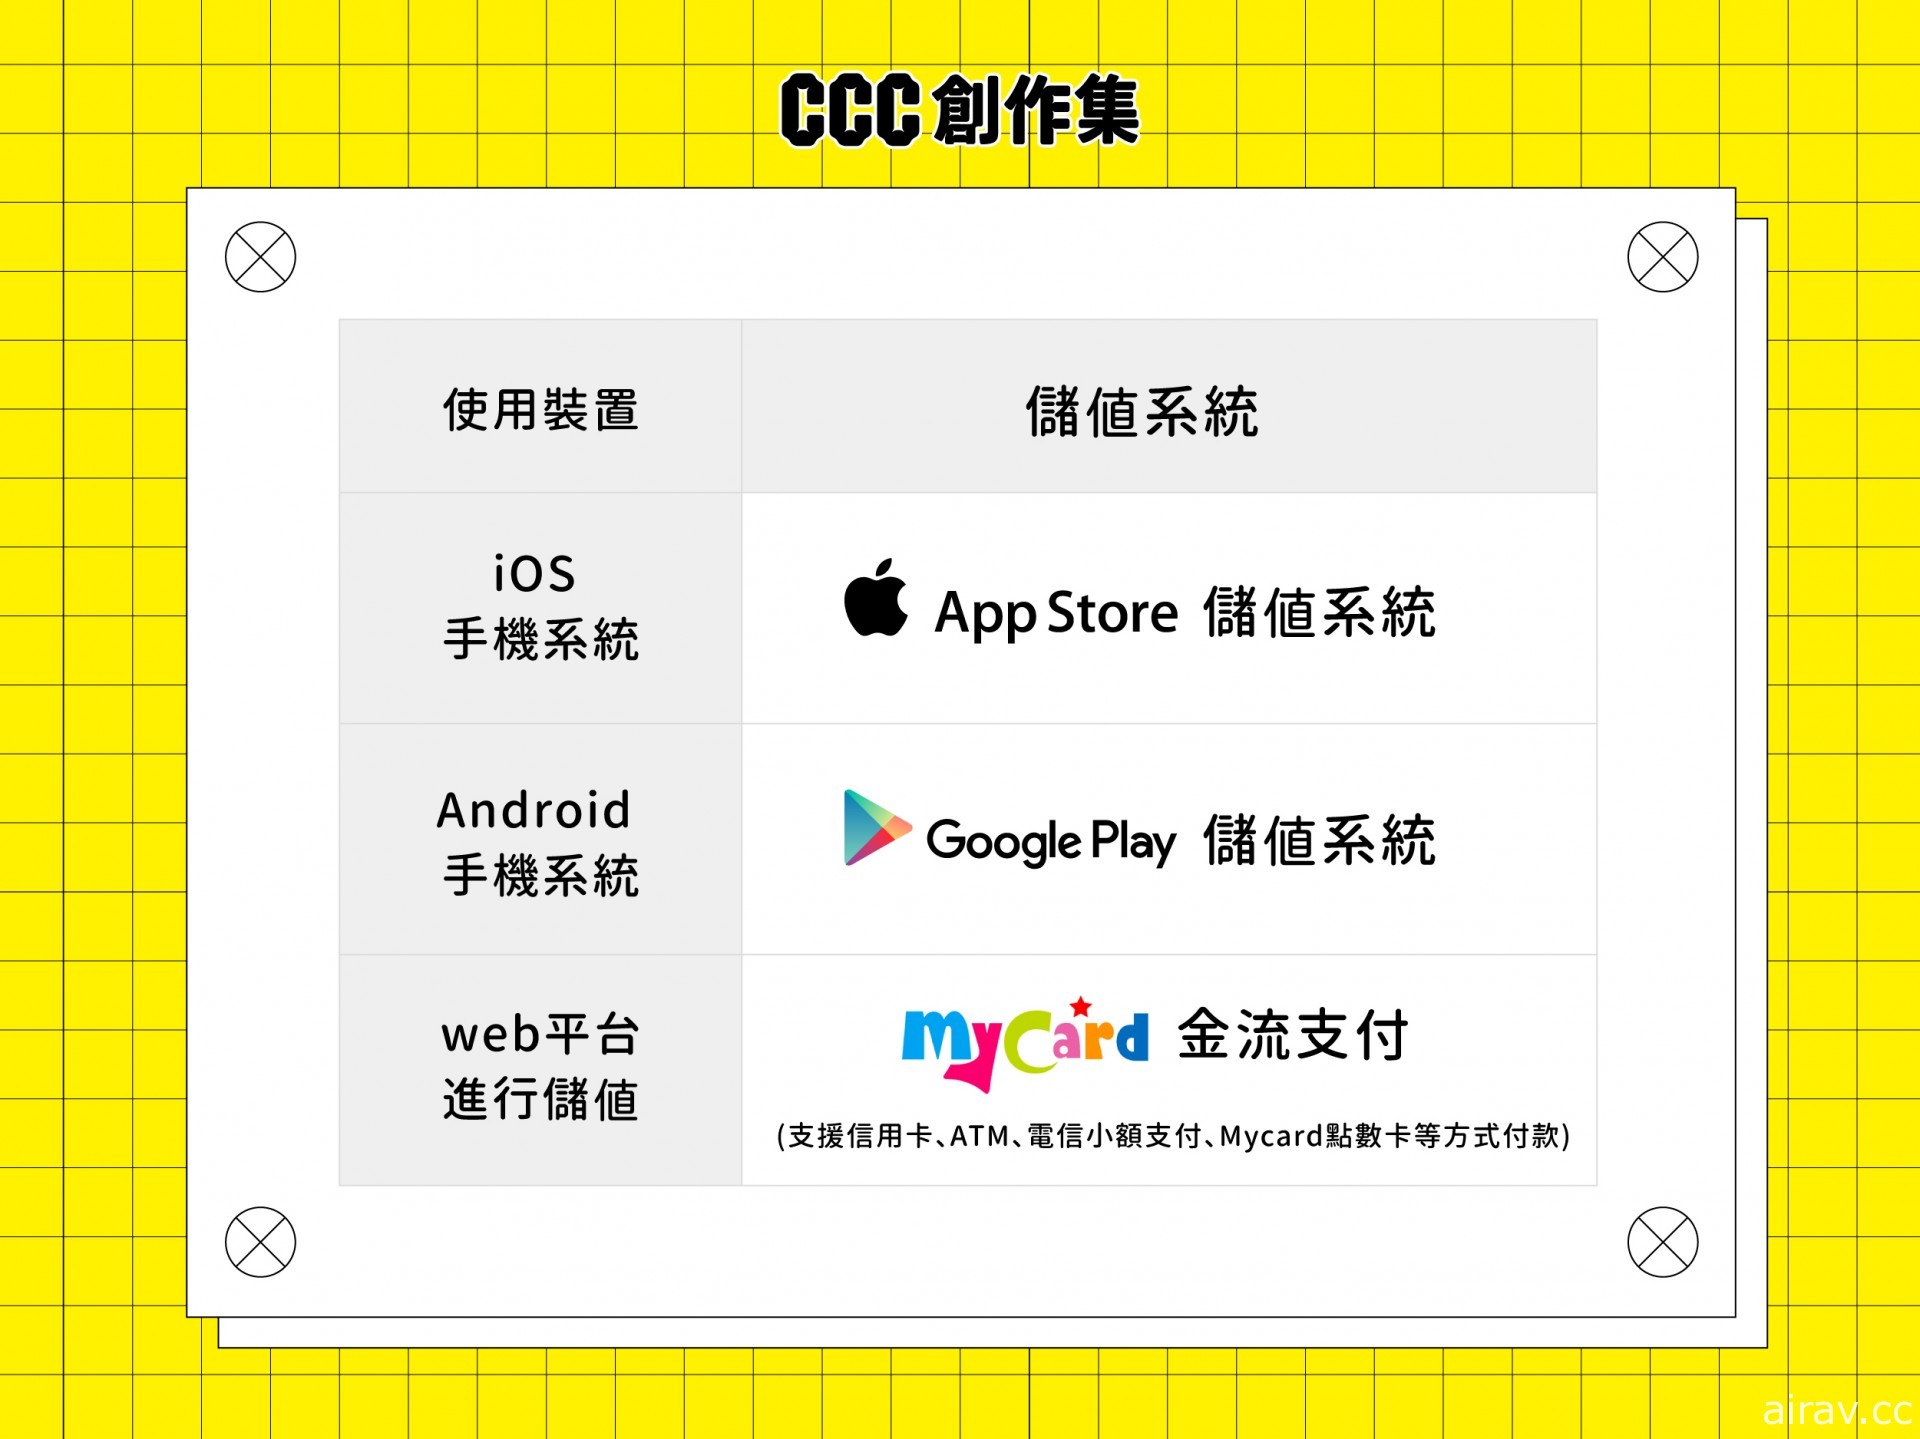 「CCC 數位平台」改版  增加租閱、付費搶先看等全新功能